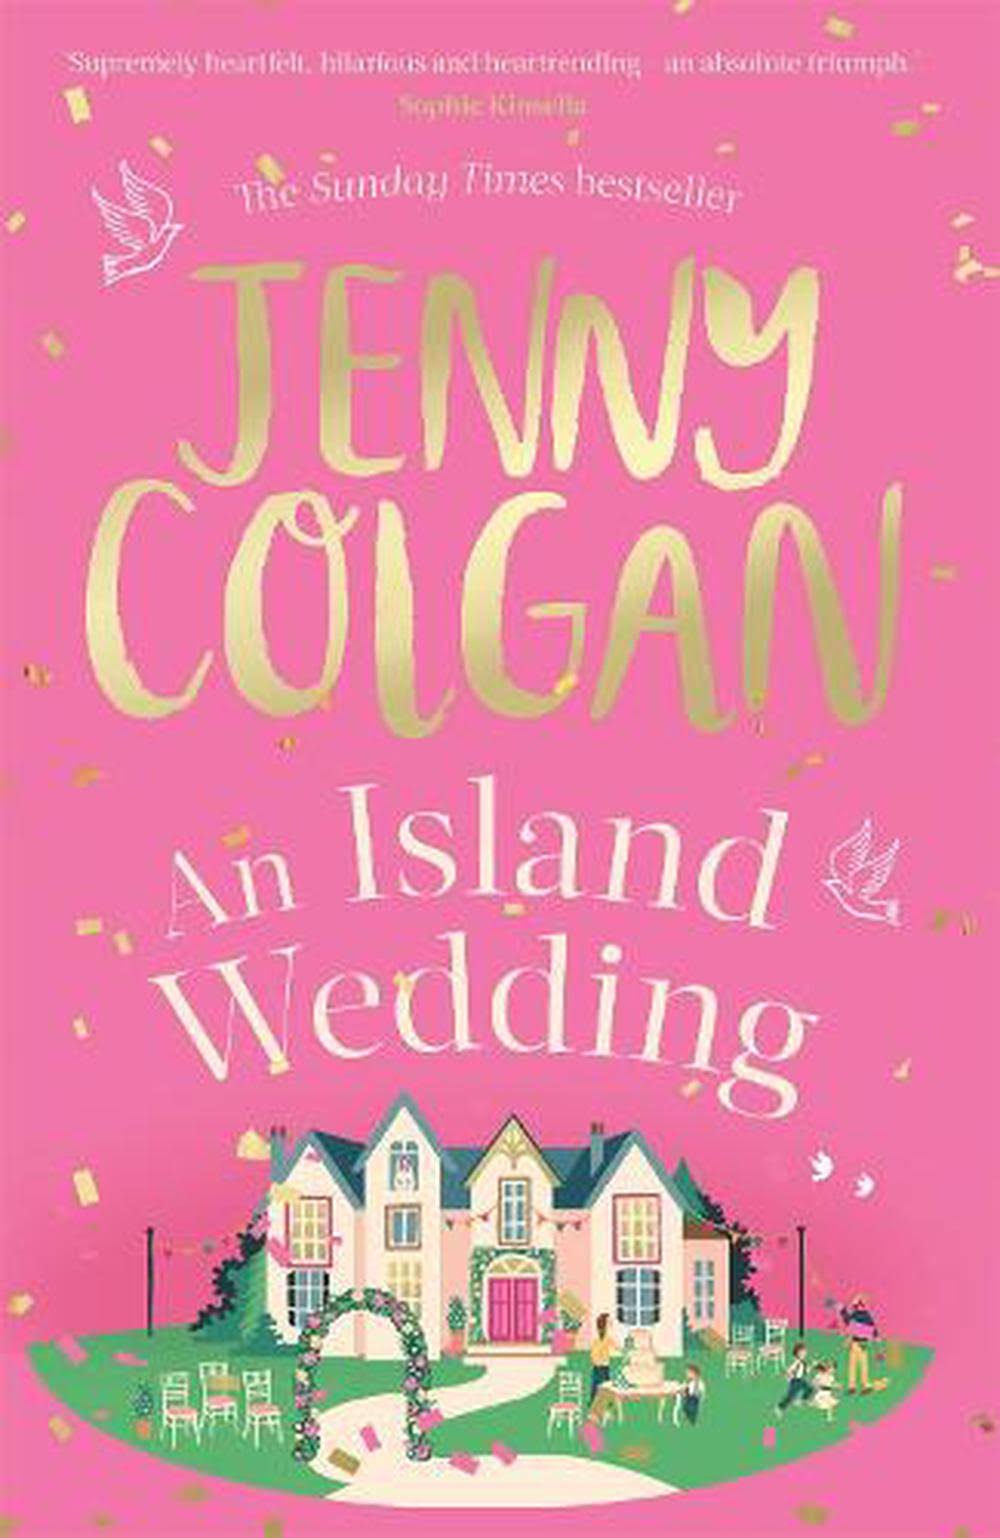 An Island Wedding [Book]